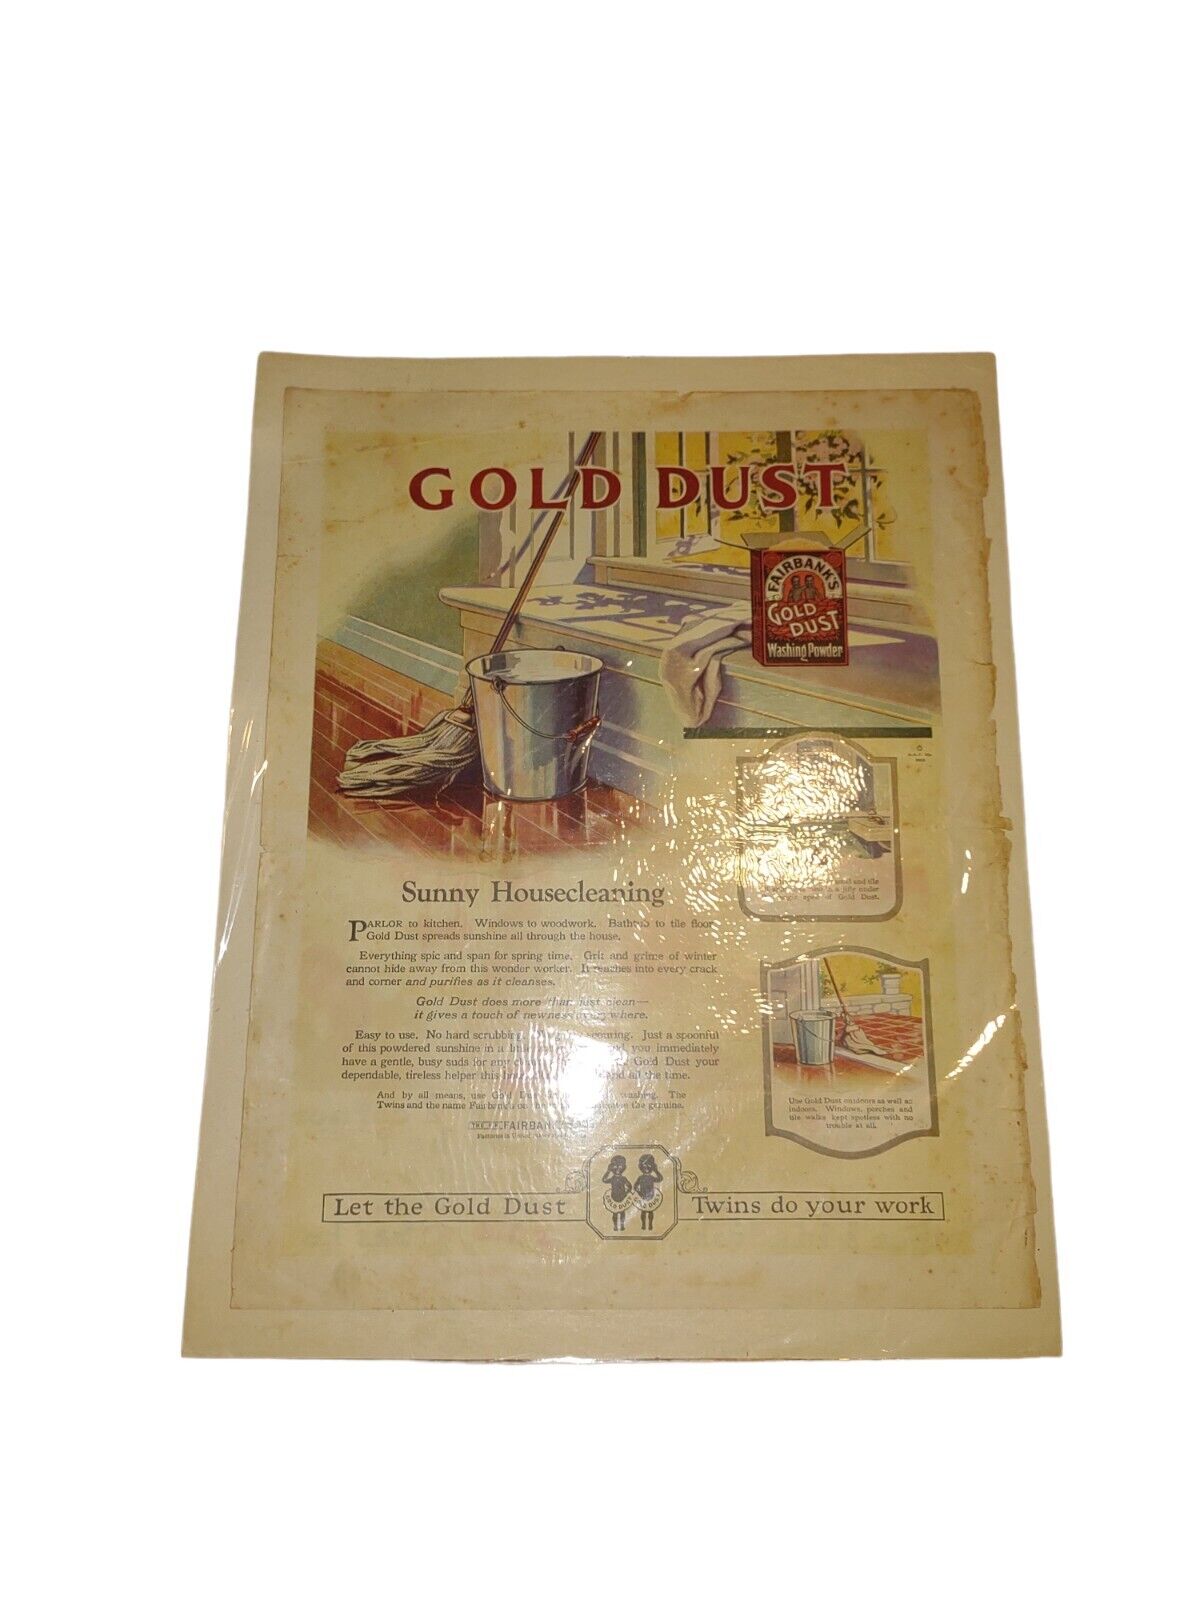 Gold Dust washing powder ad 1900's original vintage illustrated art home decor